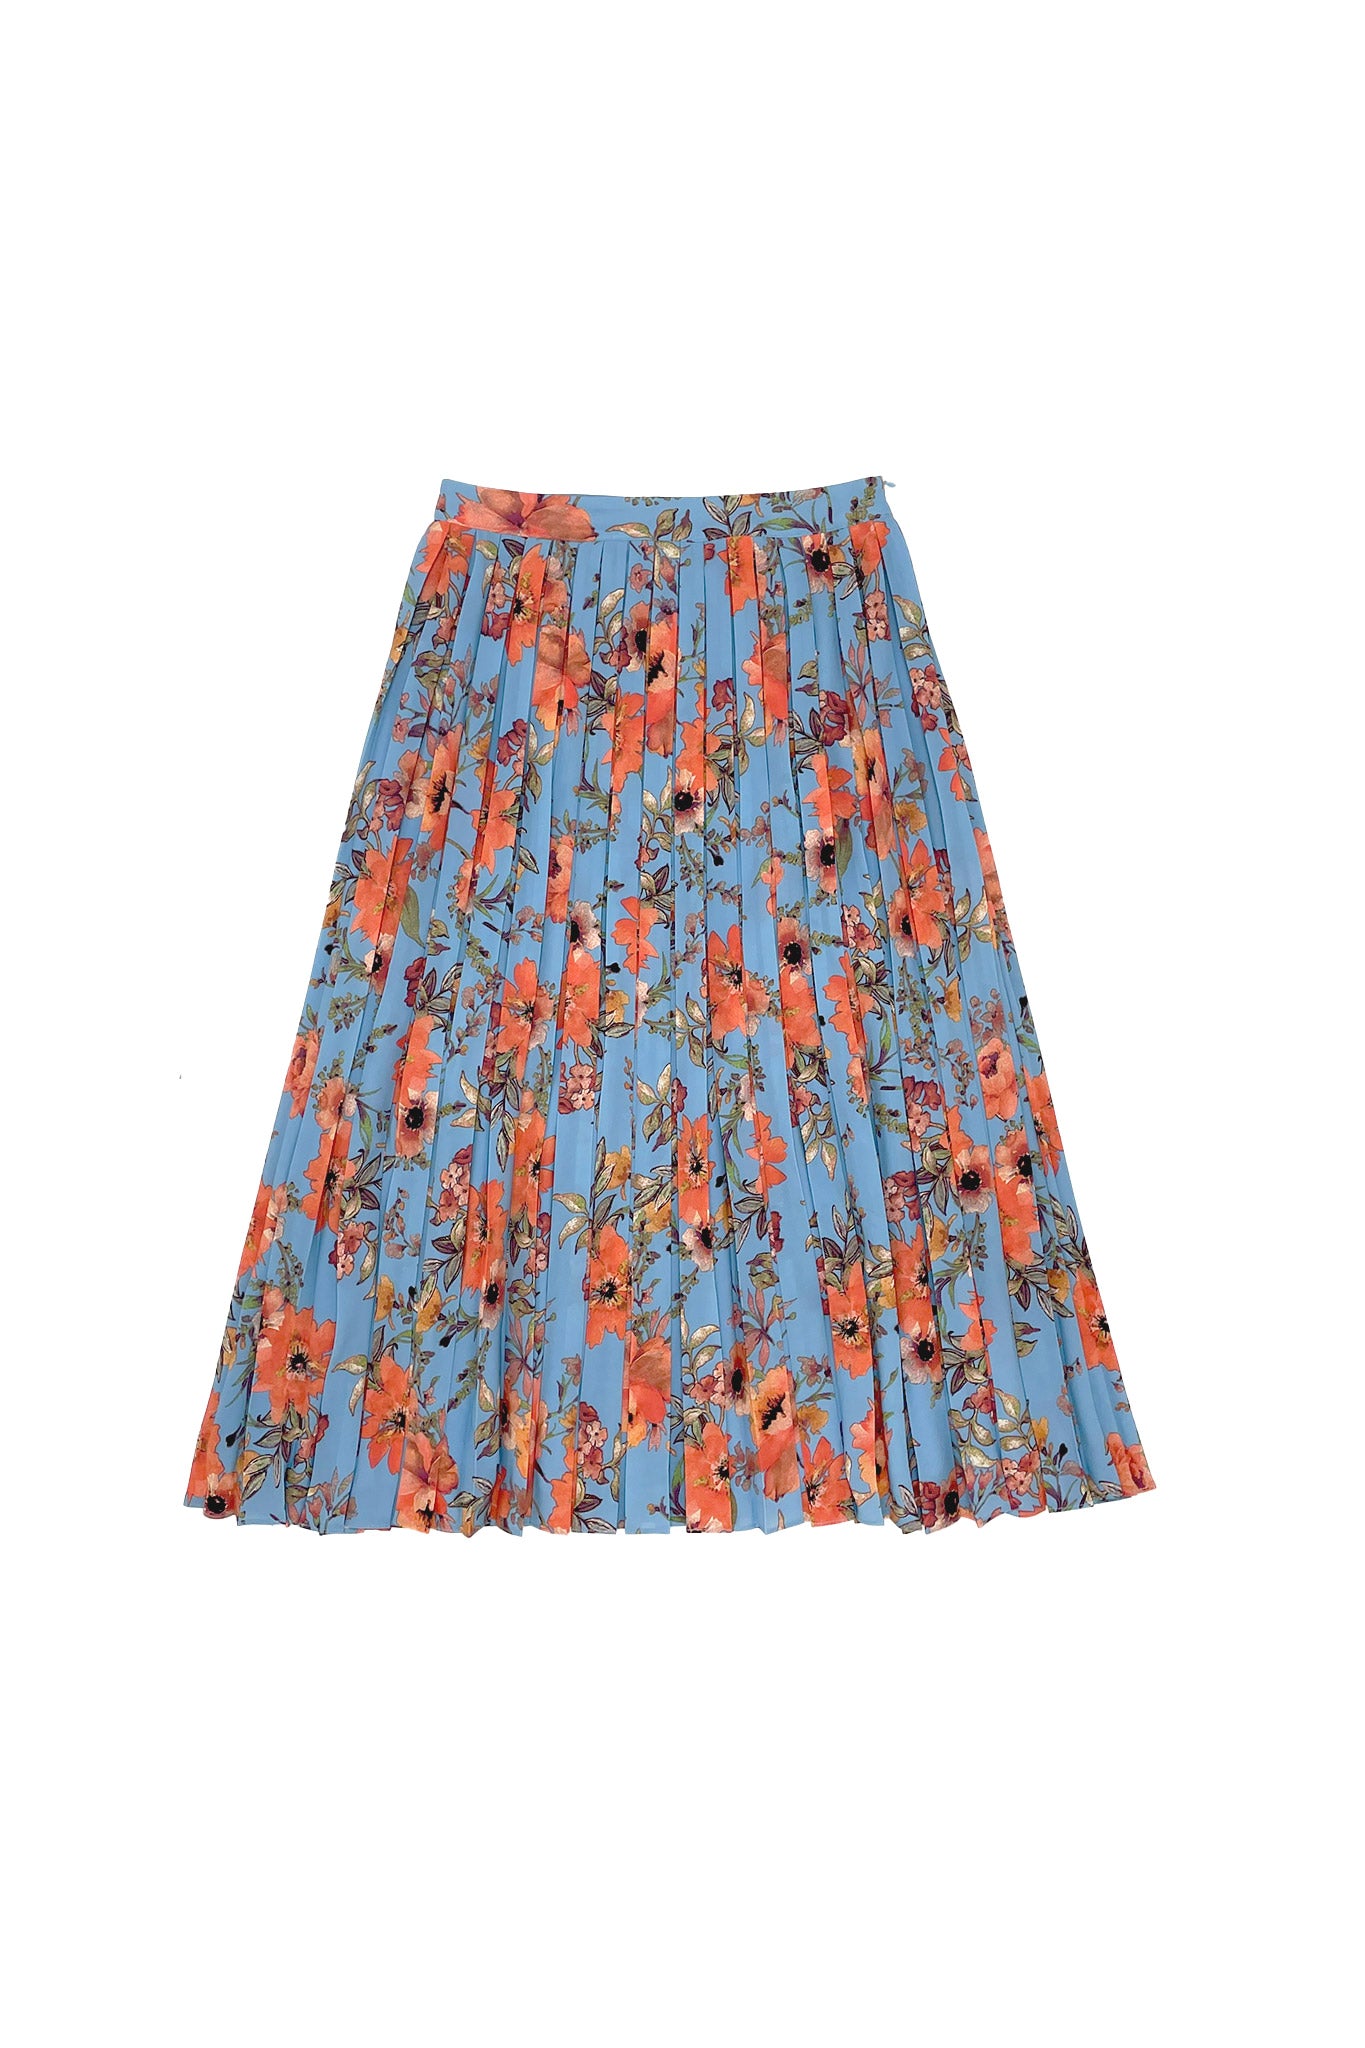 Paz Skirt in Orange Flowers #8118BF